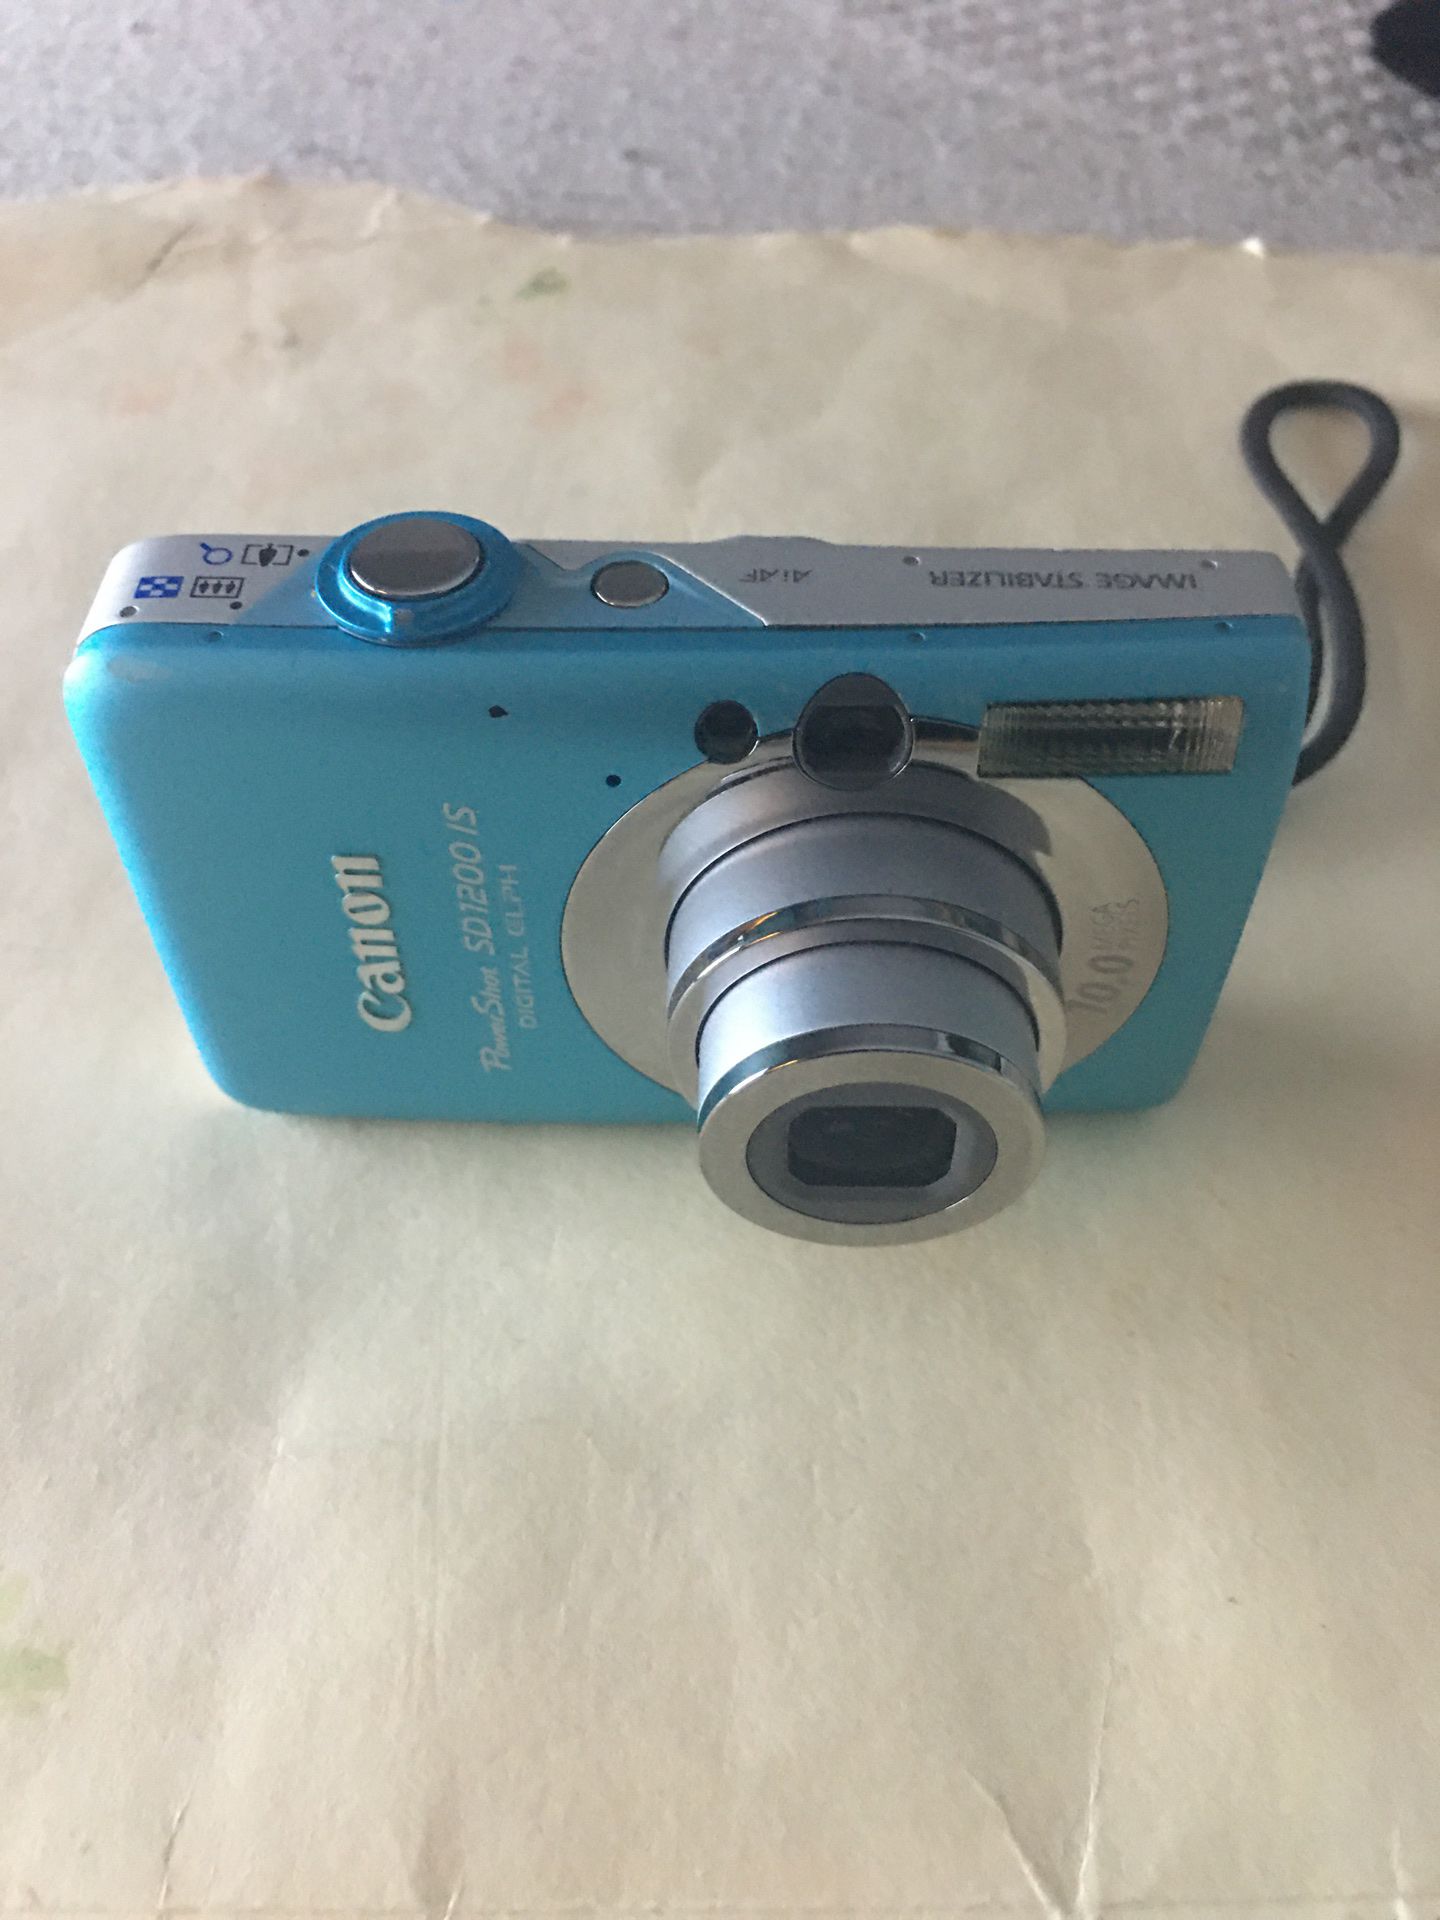 Canon powershot SD1200 IS Digital camera